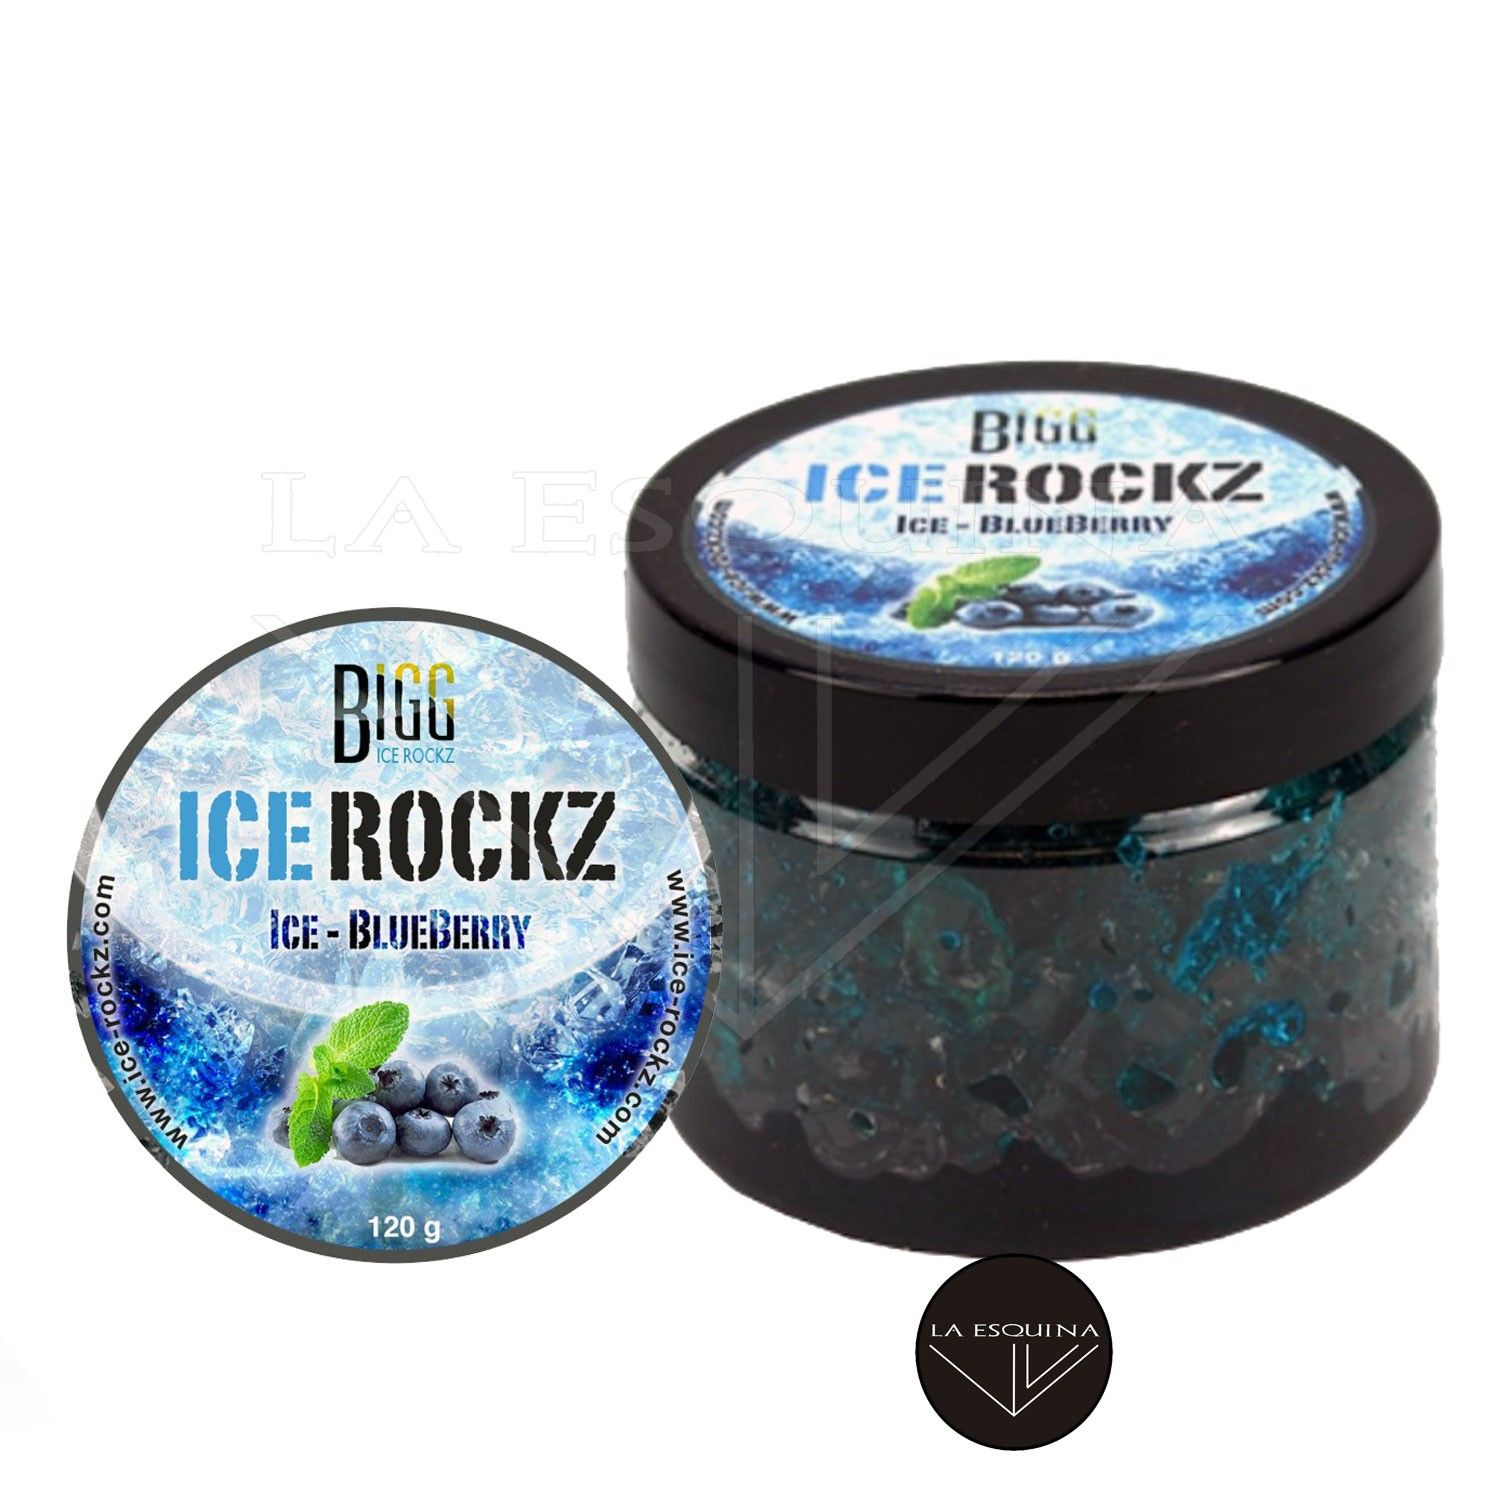 Gel Rock de Cachimba BIGG ICE ROCKZ – 120 g. – Blueberry